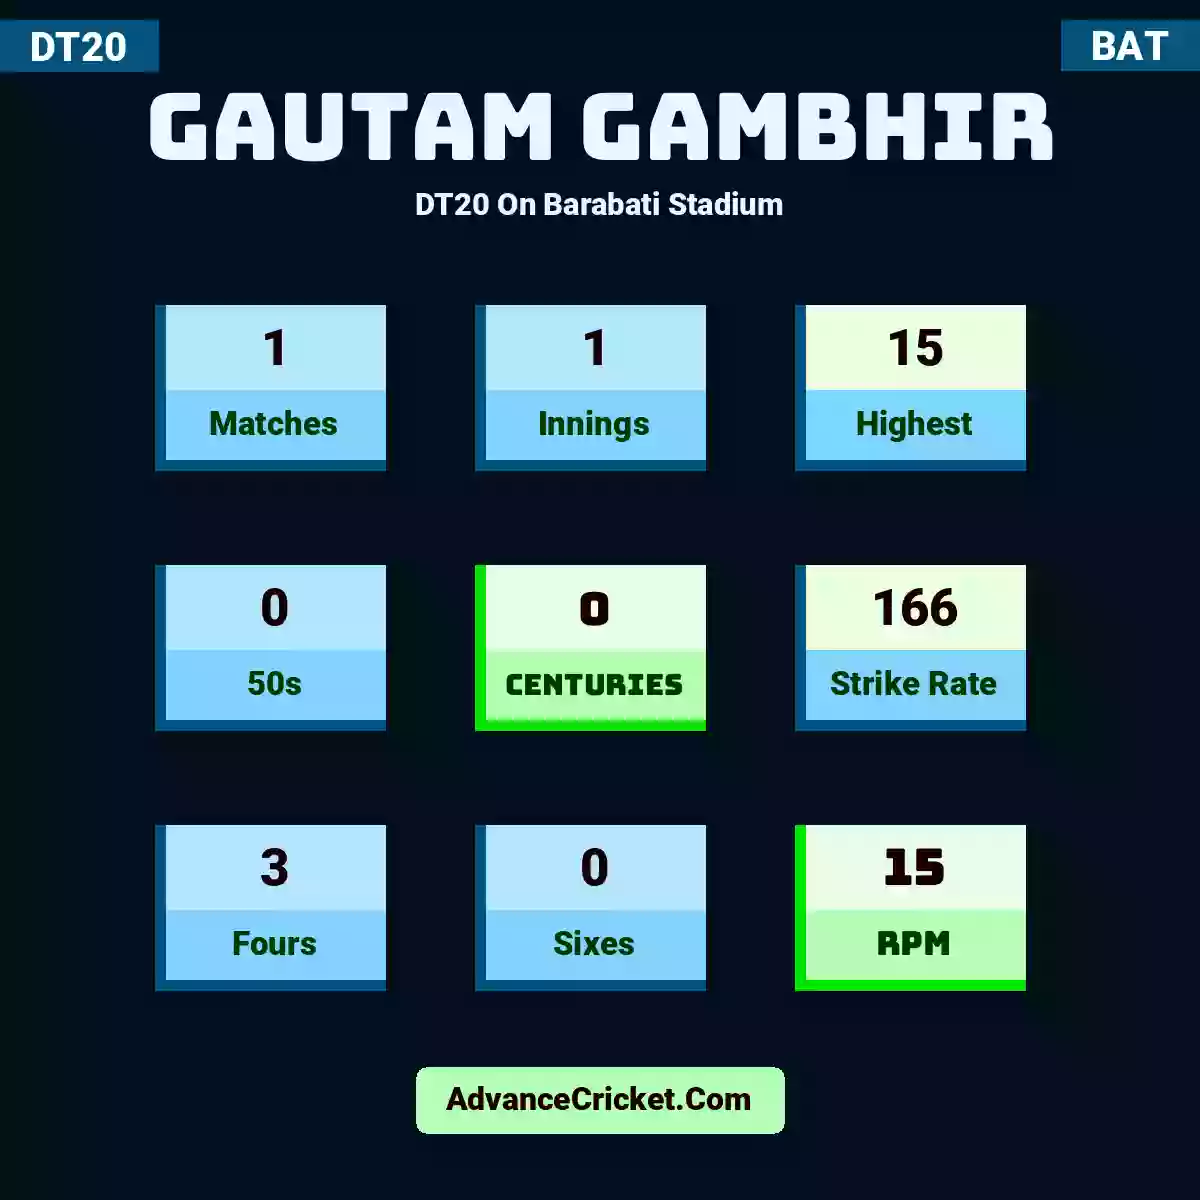 Gautam Gambhir DT20  On Barabati Stadium, Gautam Gambhir played 1 matches, scored 15 runs as highest, 0 half-centuries, and 0 centuries, with a strike rate of 166. G.Gambhir hit 3 fours and 0 sixes, with an RPM of 15.